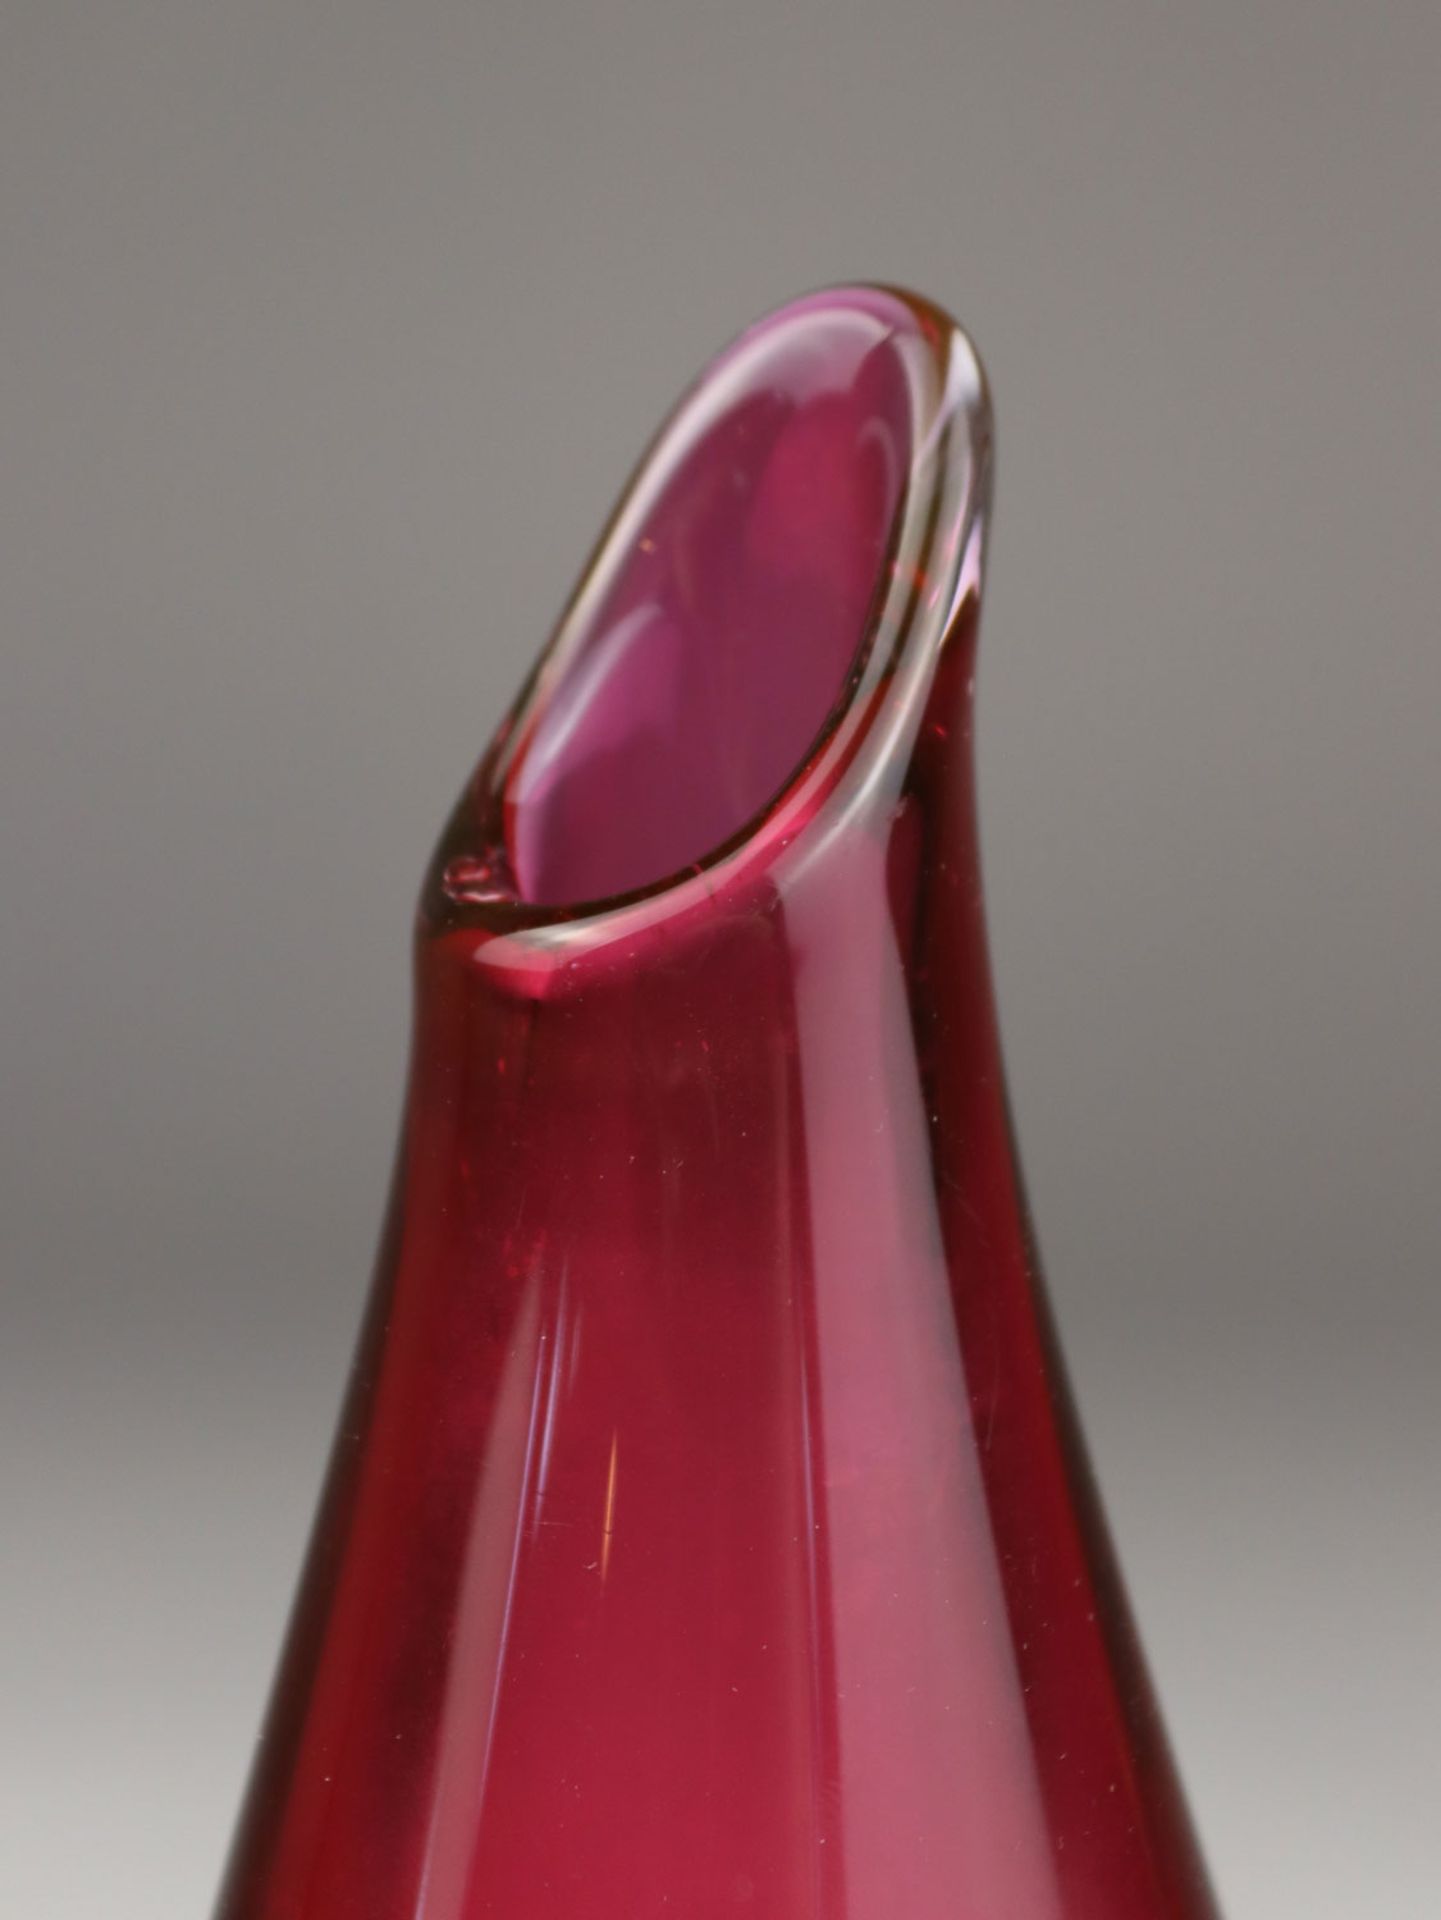 Seguso - Vase - Image 3 of 4